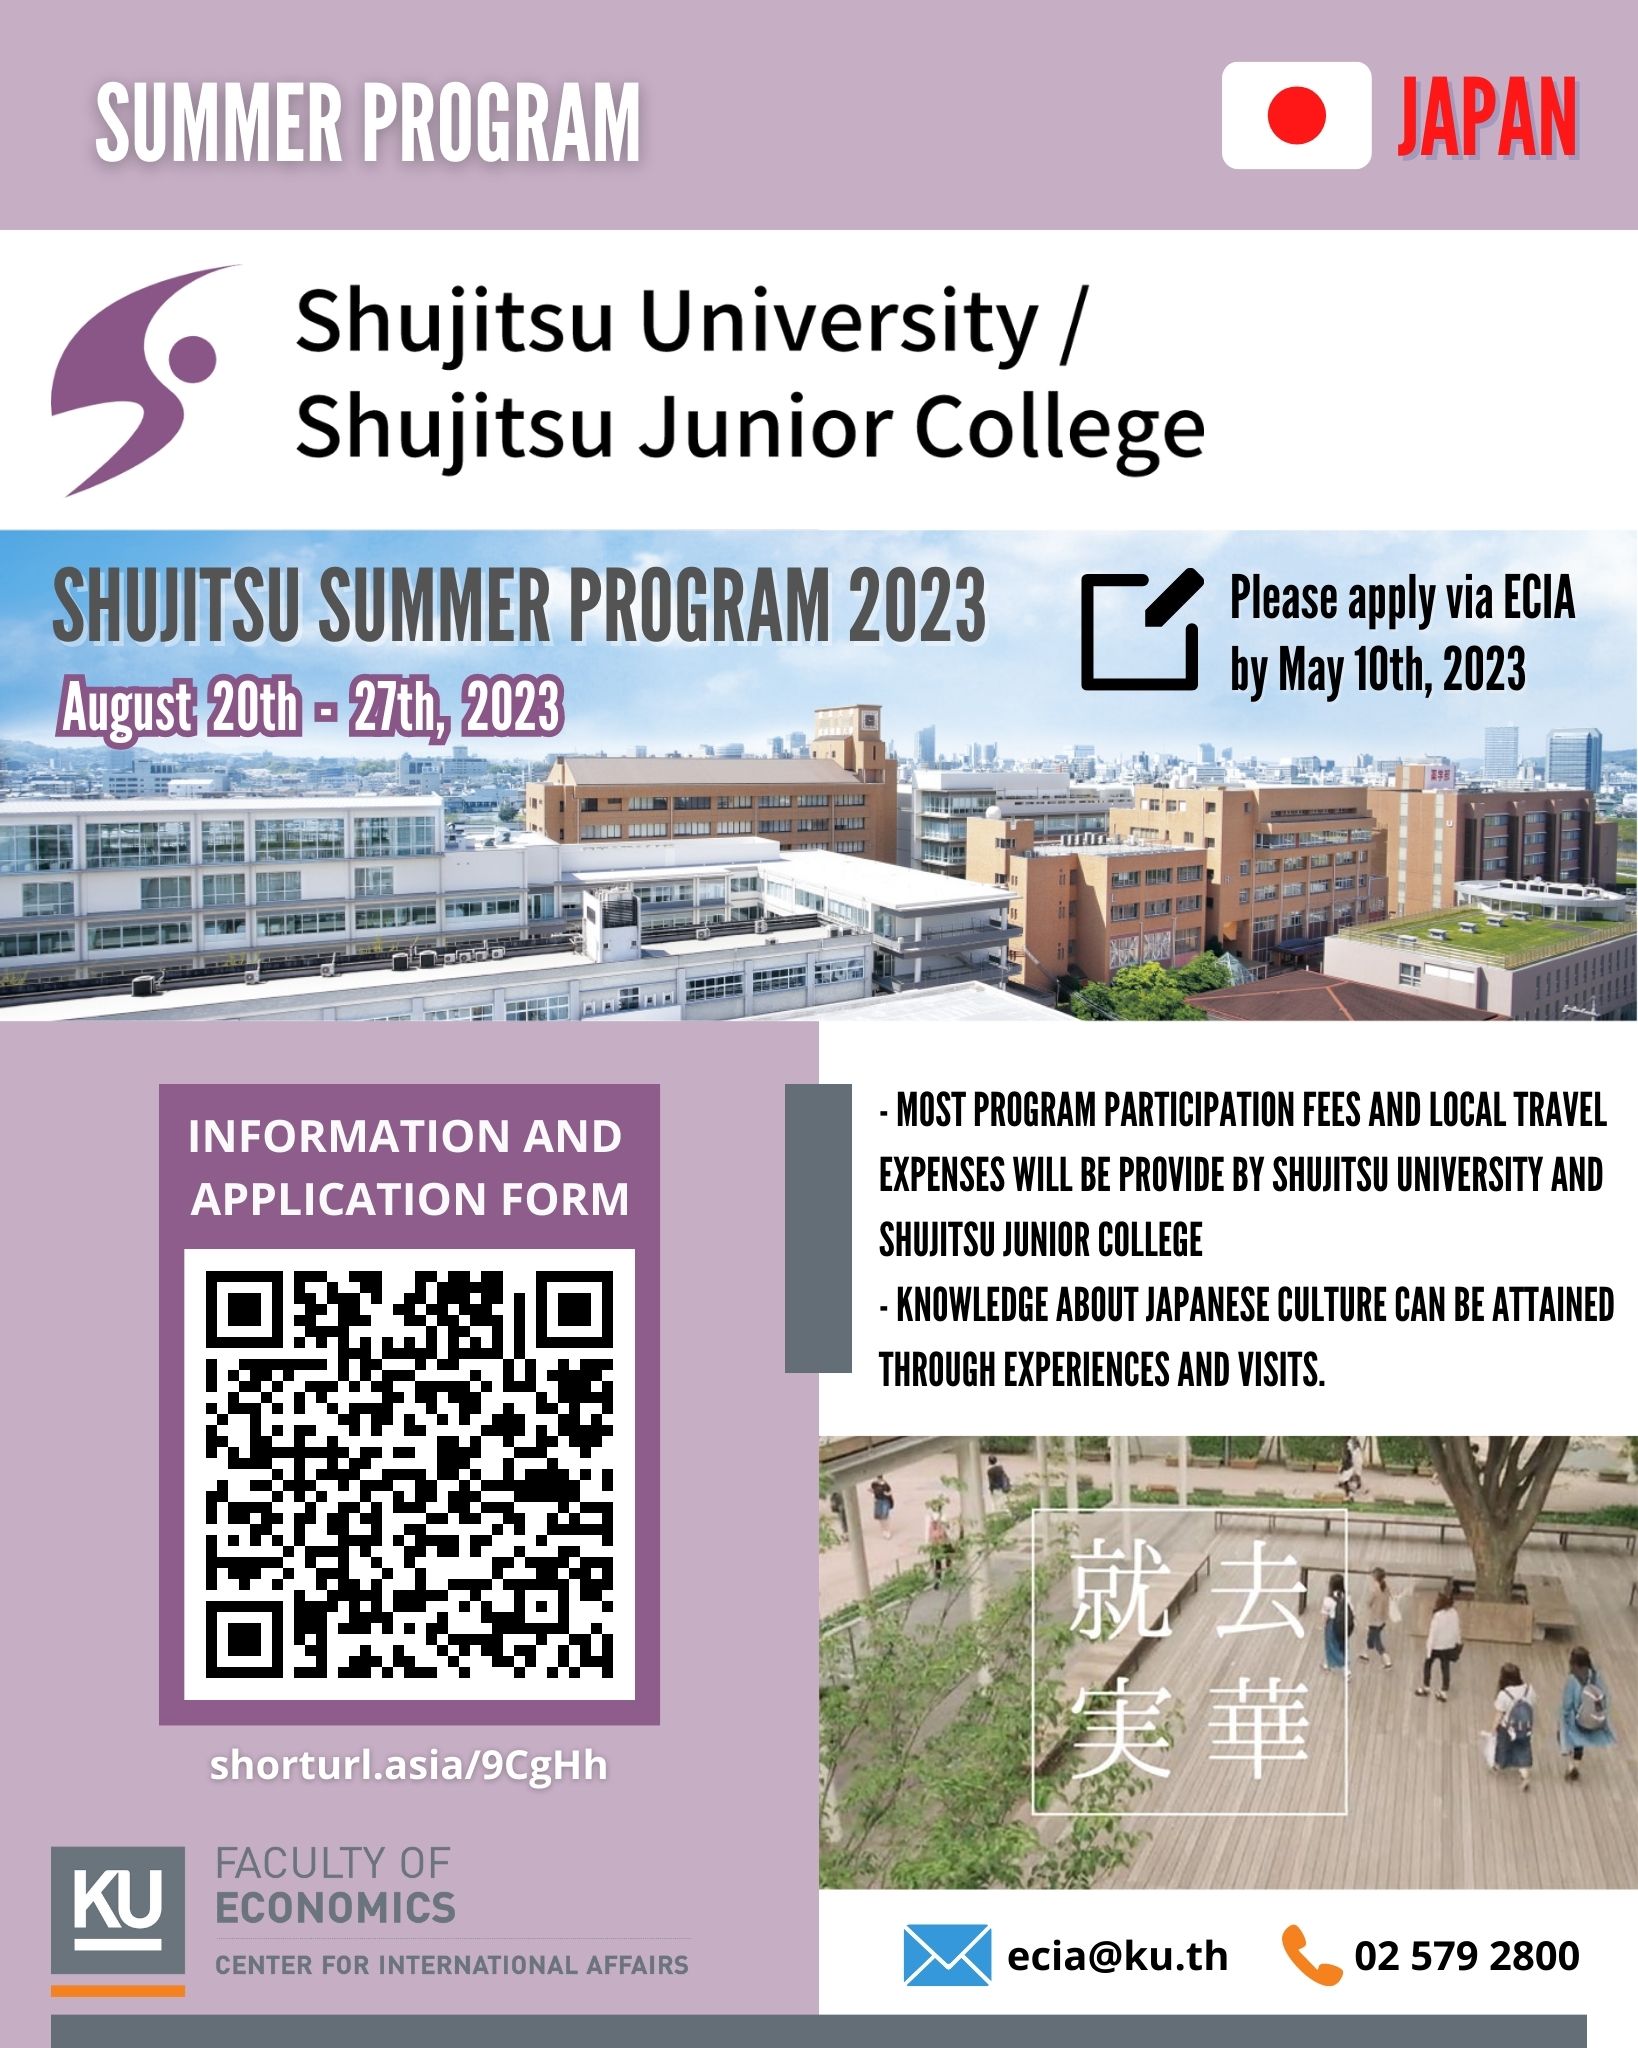 SUMMER PROGRAM 2023 at SHUJITSU University, JAPAN